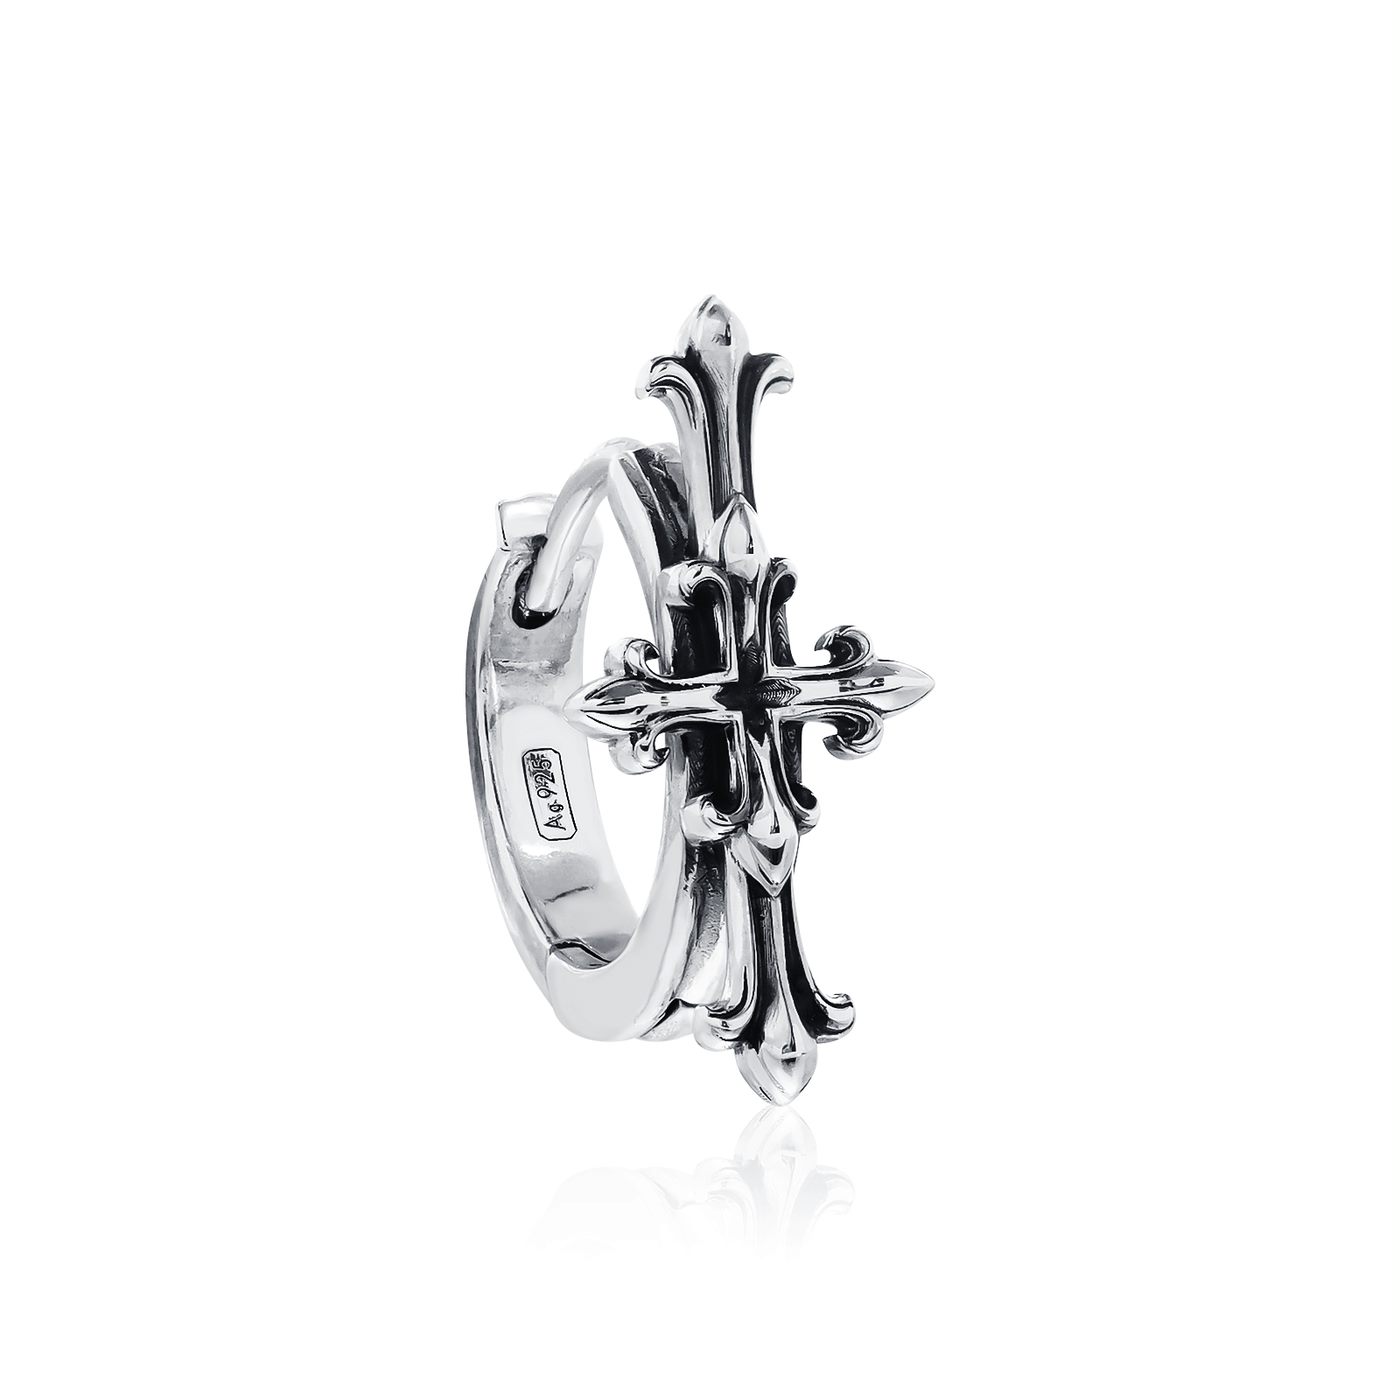 Grand Cross Huggie Earring - Silver ต่างหูเงินแท้ 925 แบบห่วงฮักกี้ แกะมือขัดเงาลงดำขับลาย  **ขายเป็นชิ้น/ข้าง